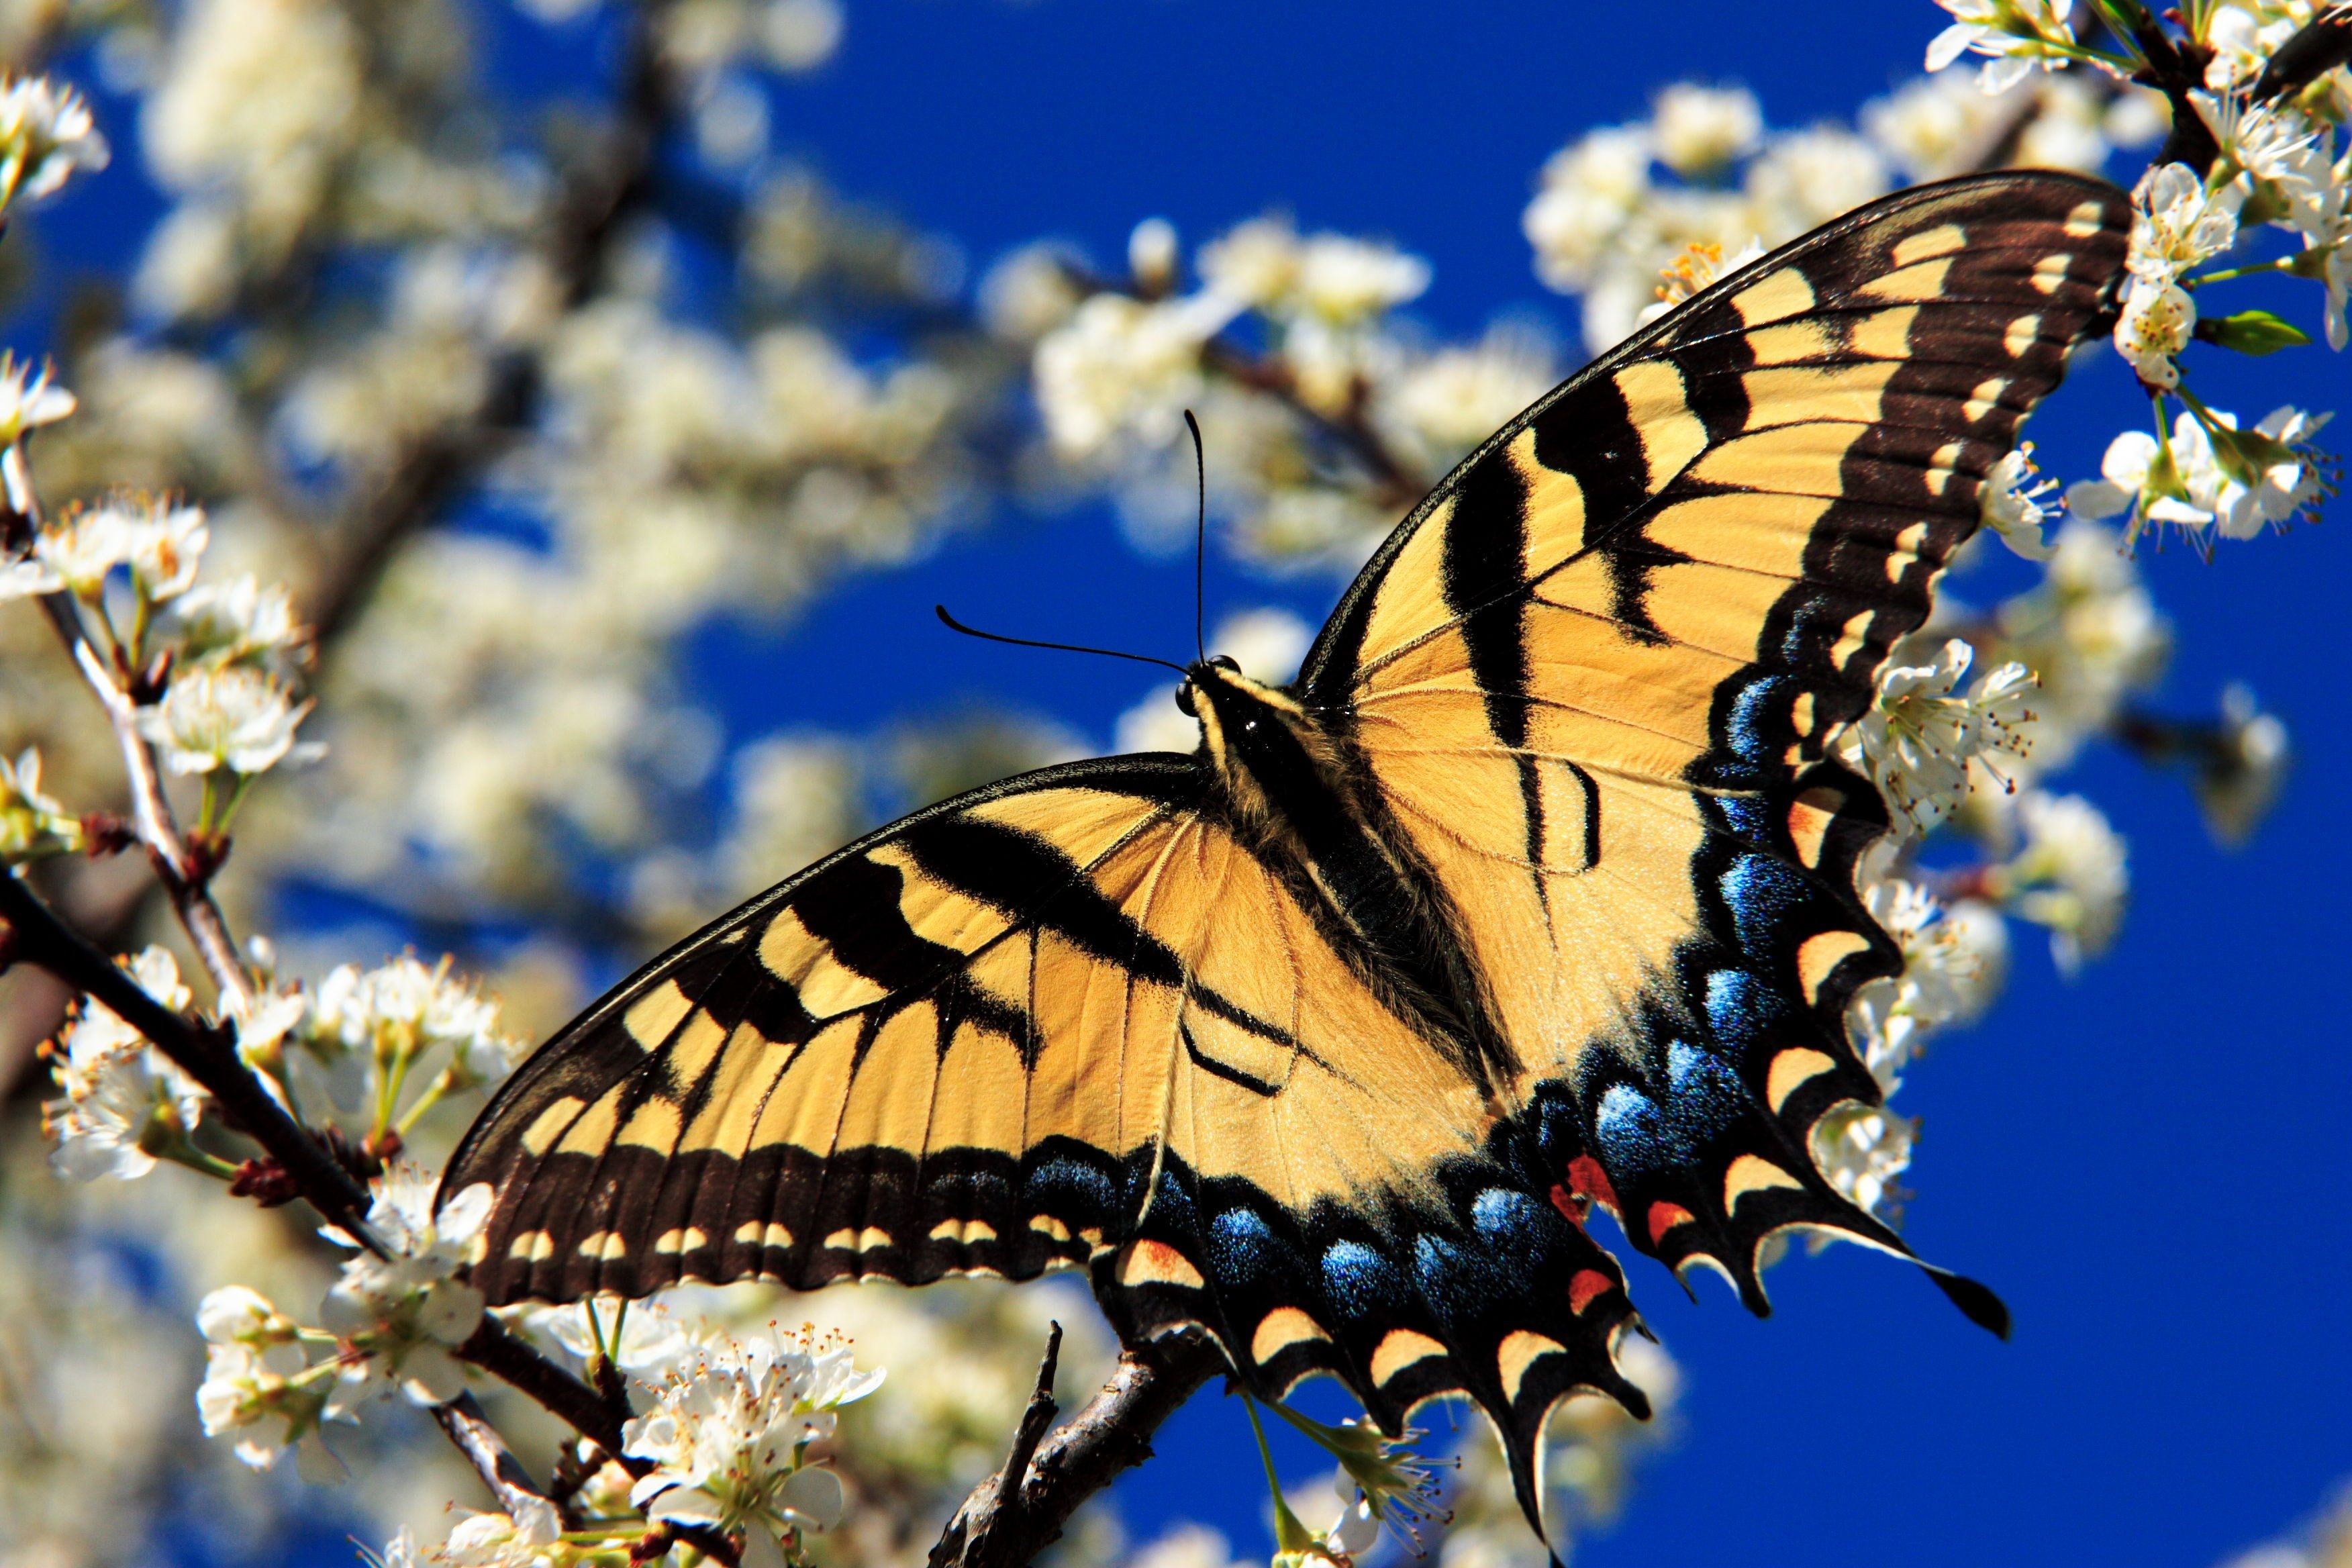 Swallowtail butterflies HD wallpaper free download